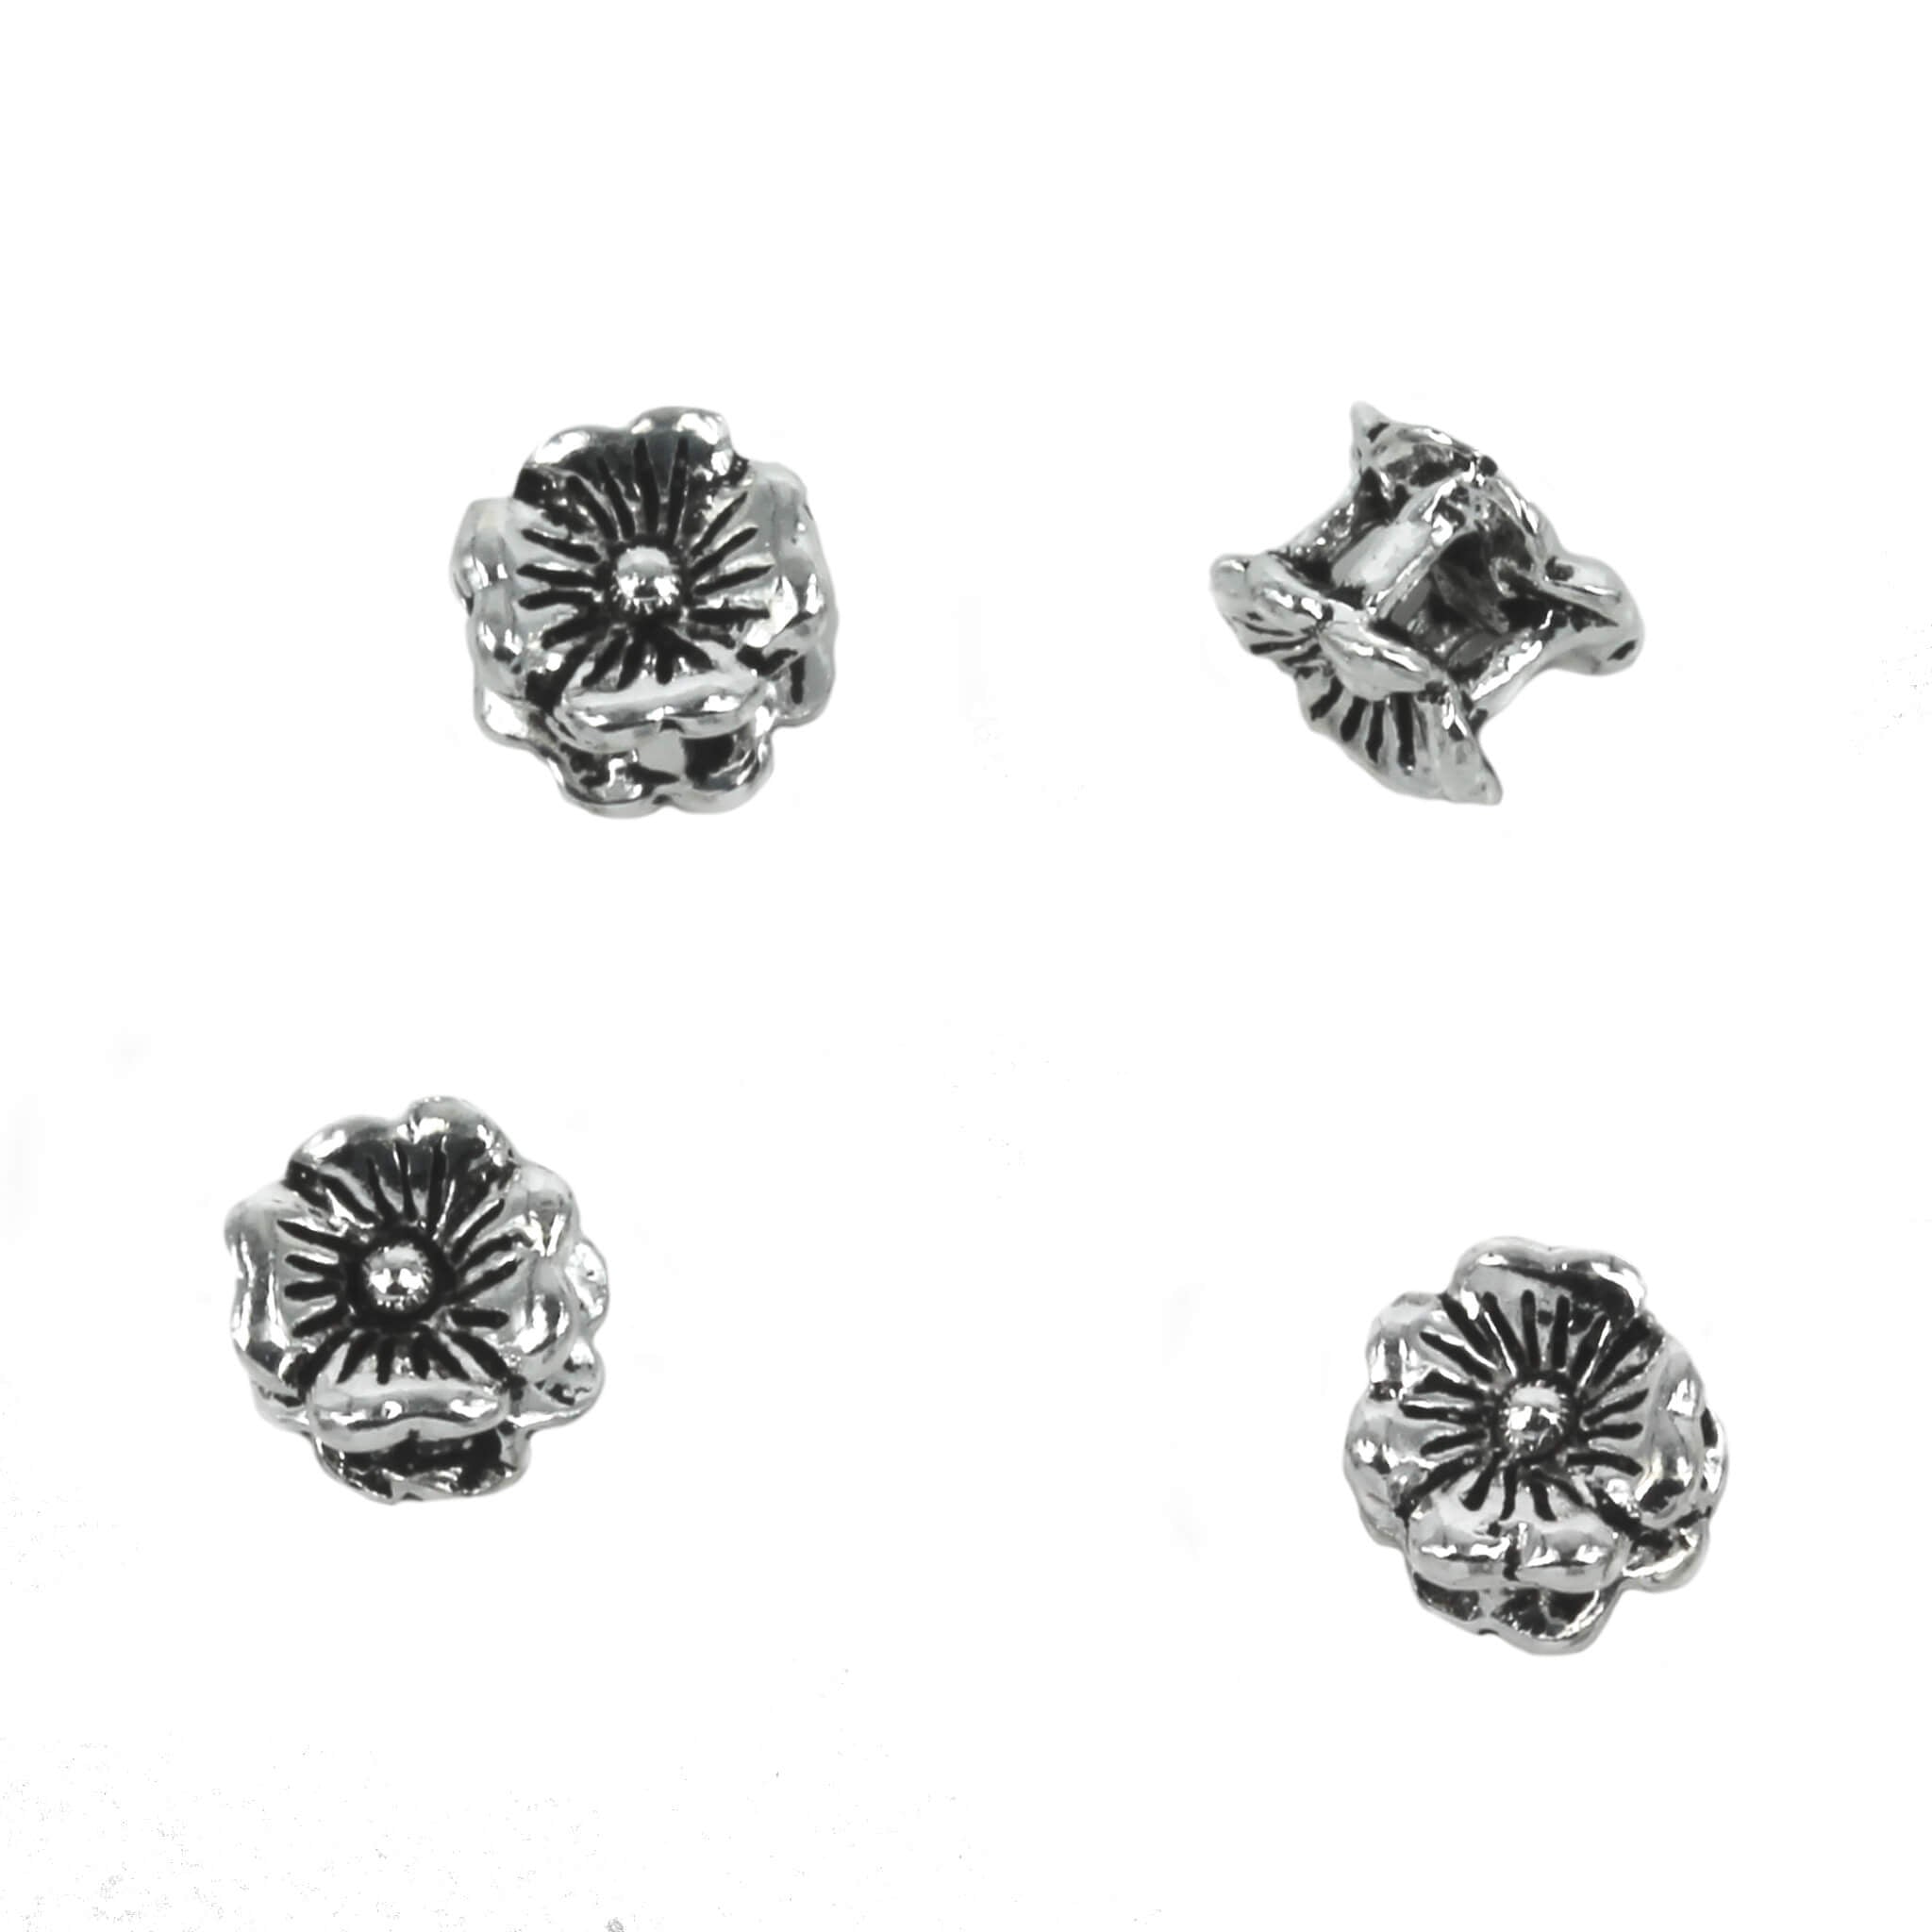 Flower Bead in Sterling Silver 6x6mm